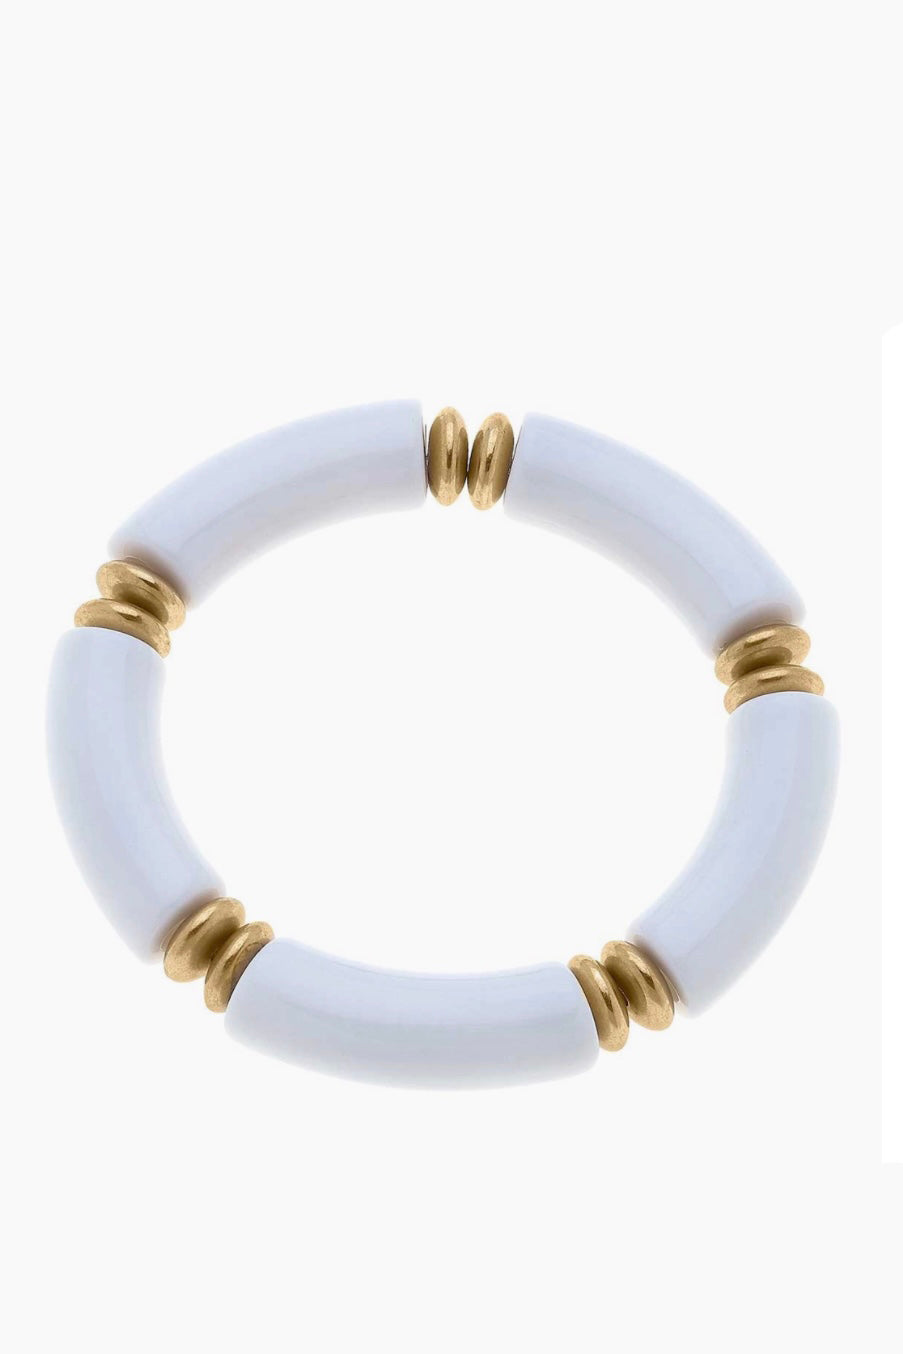 White Resin Stretch Bracelet Jewelry available at Southern Sunday